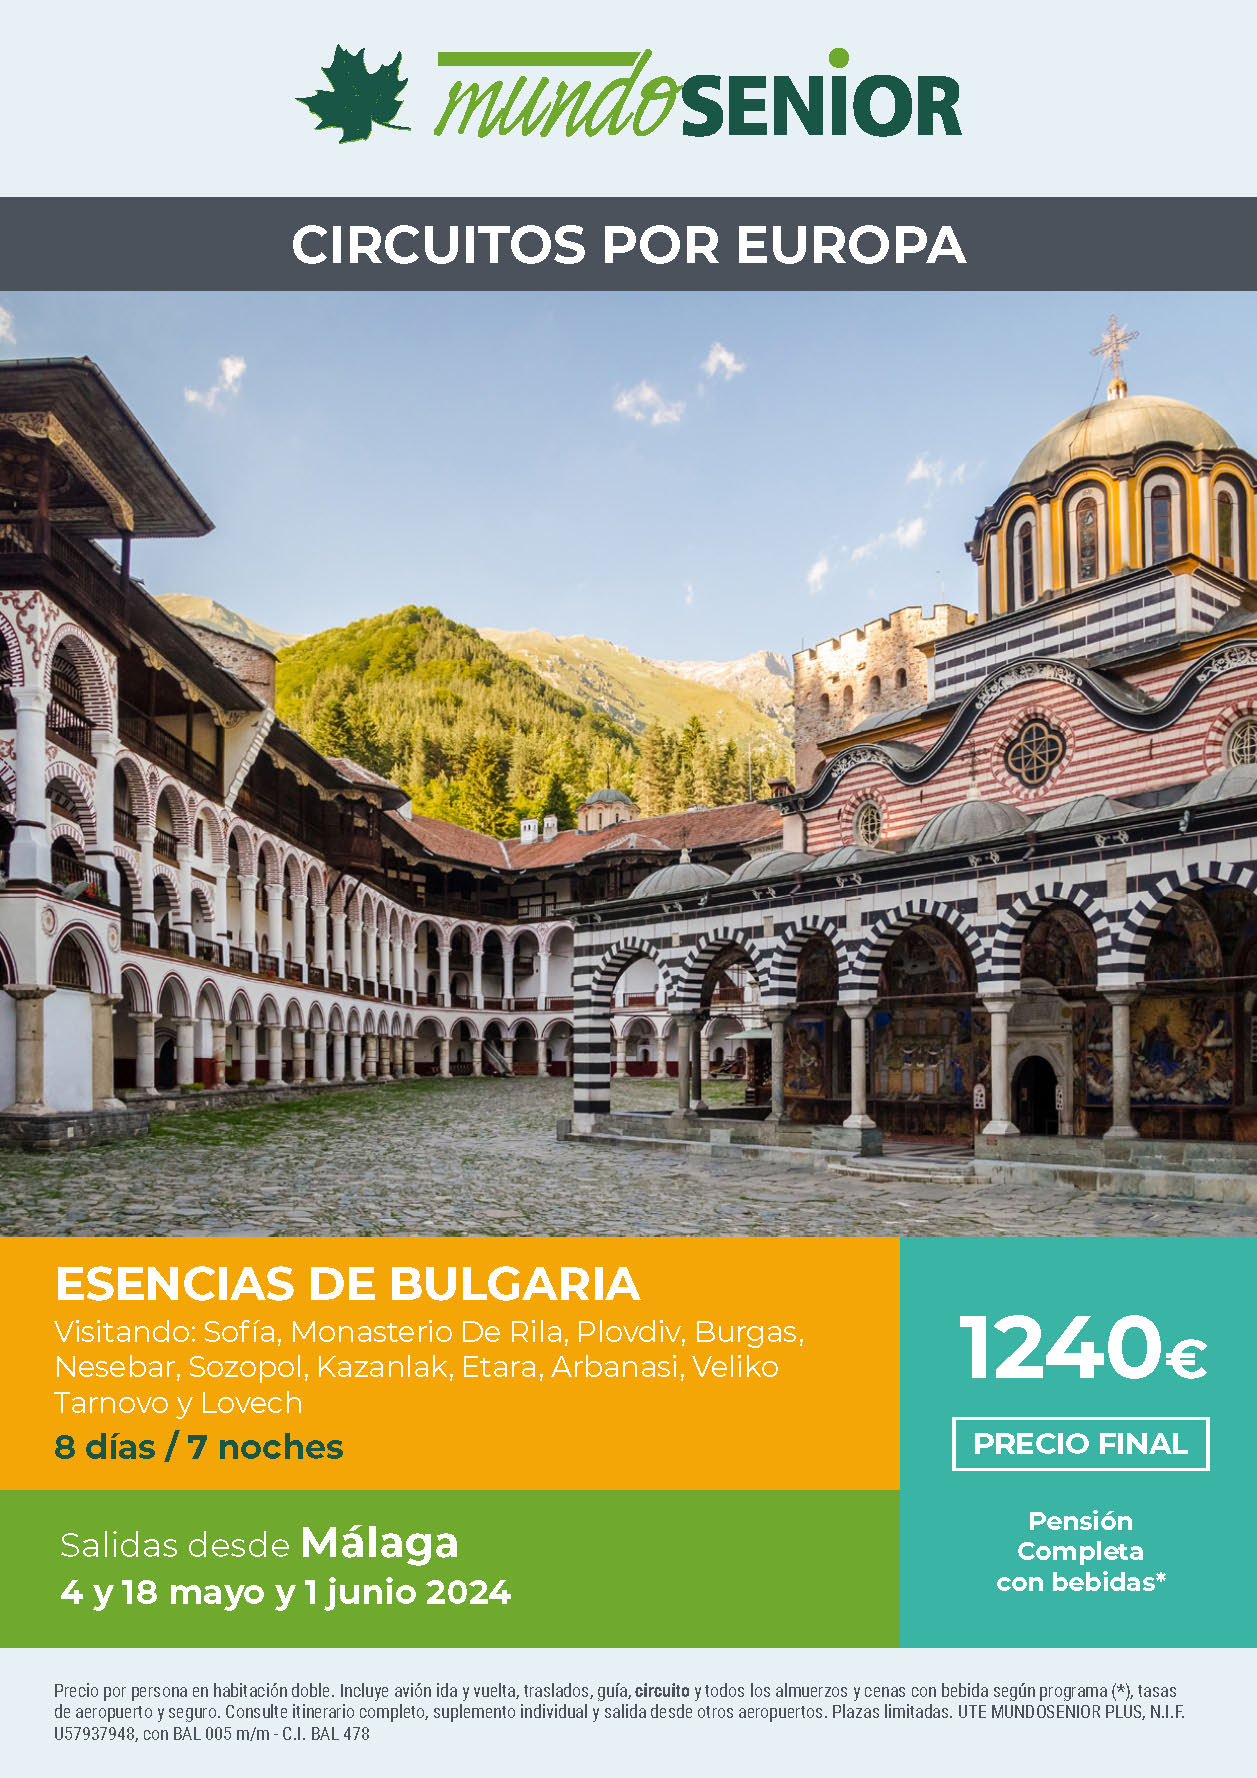 Oferta Mundo Senior circuito Esencias de Bulgaria Pension Completa 8 dias salidas mayo junio 2024 en vuelo directo desde Malaga